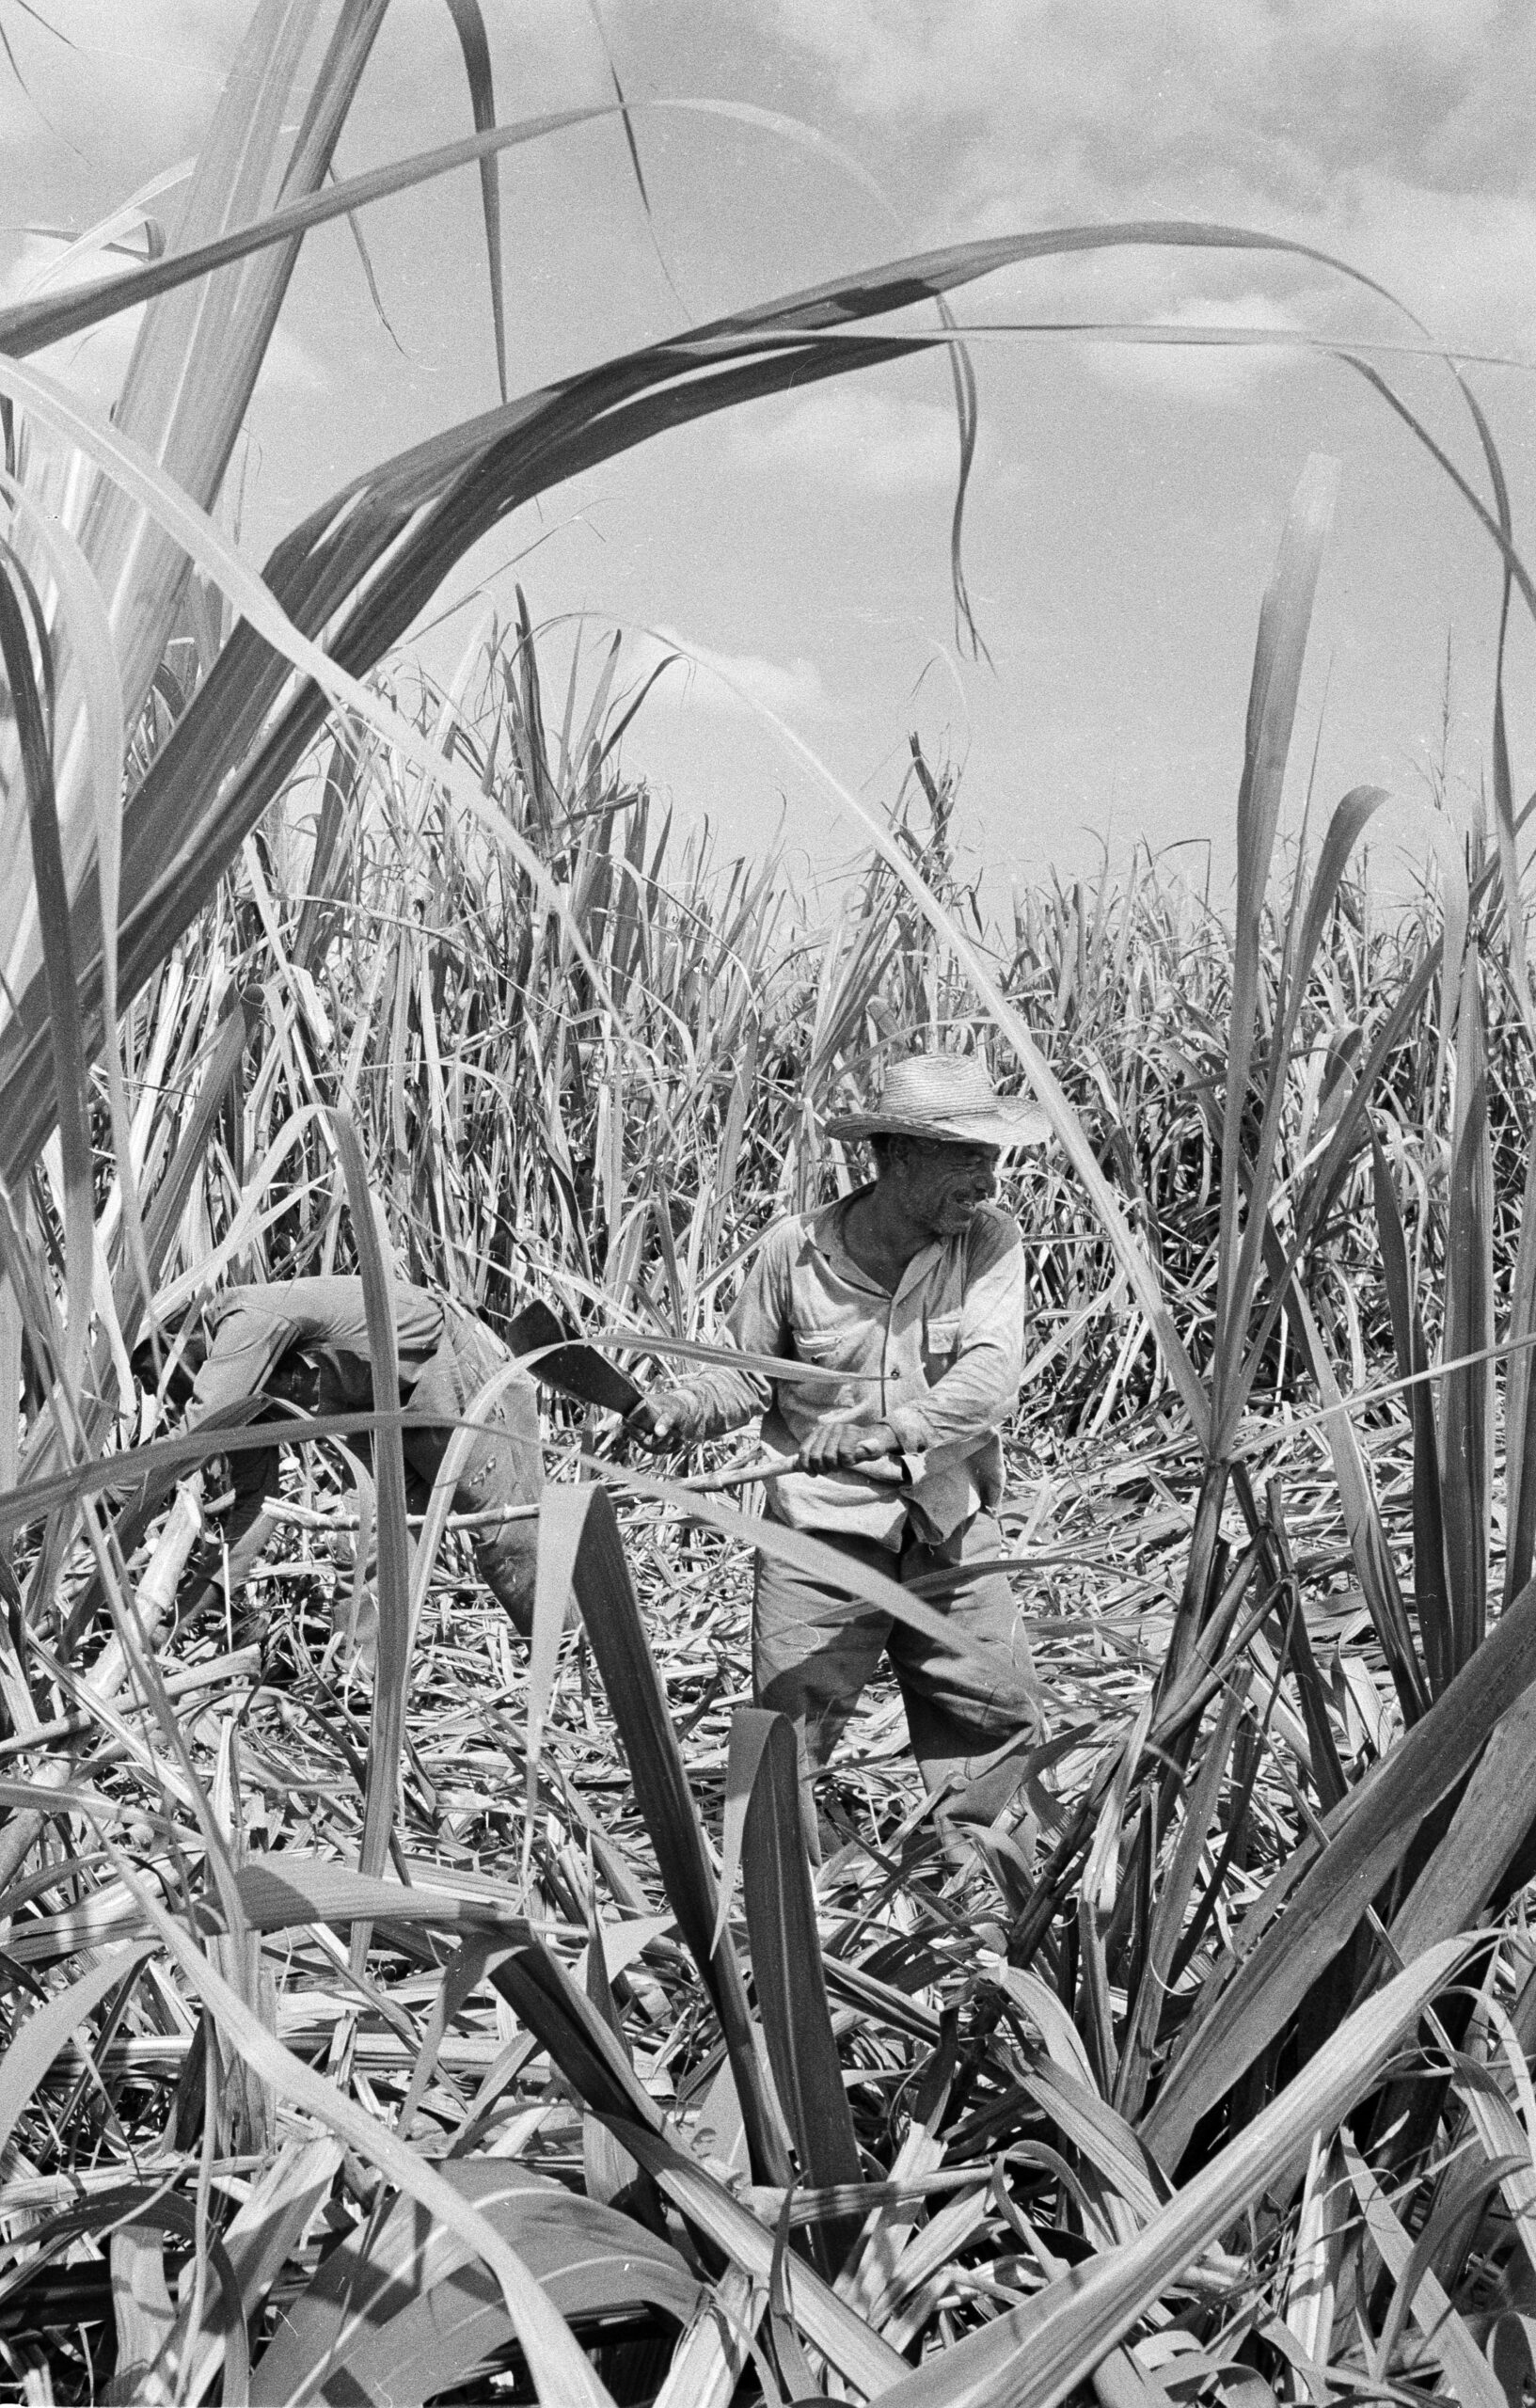 A cane cutter swings a machete as he harvests sugar cane in Cuba's fields